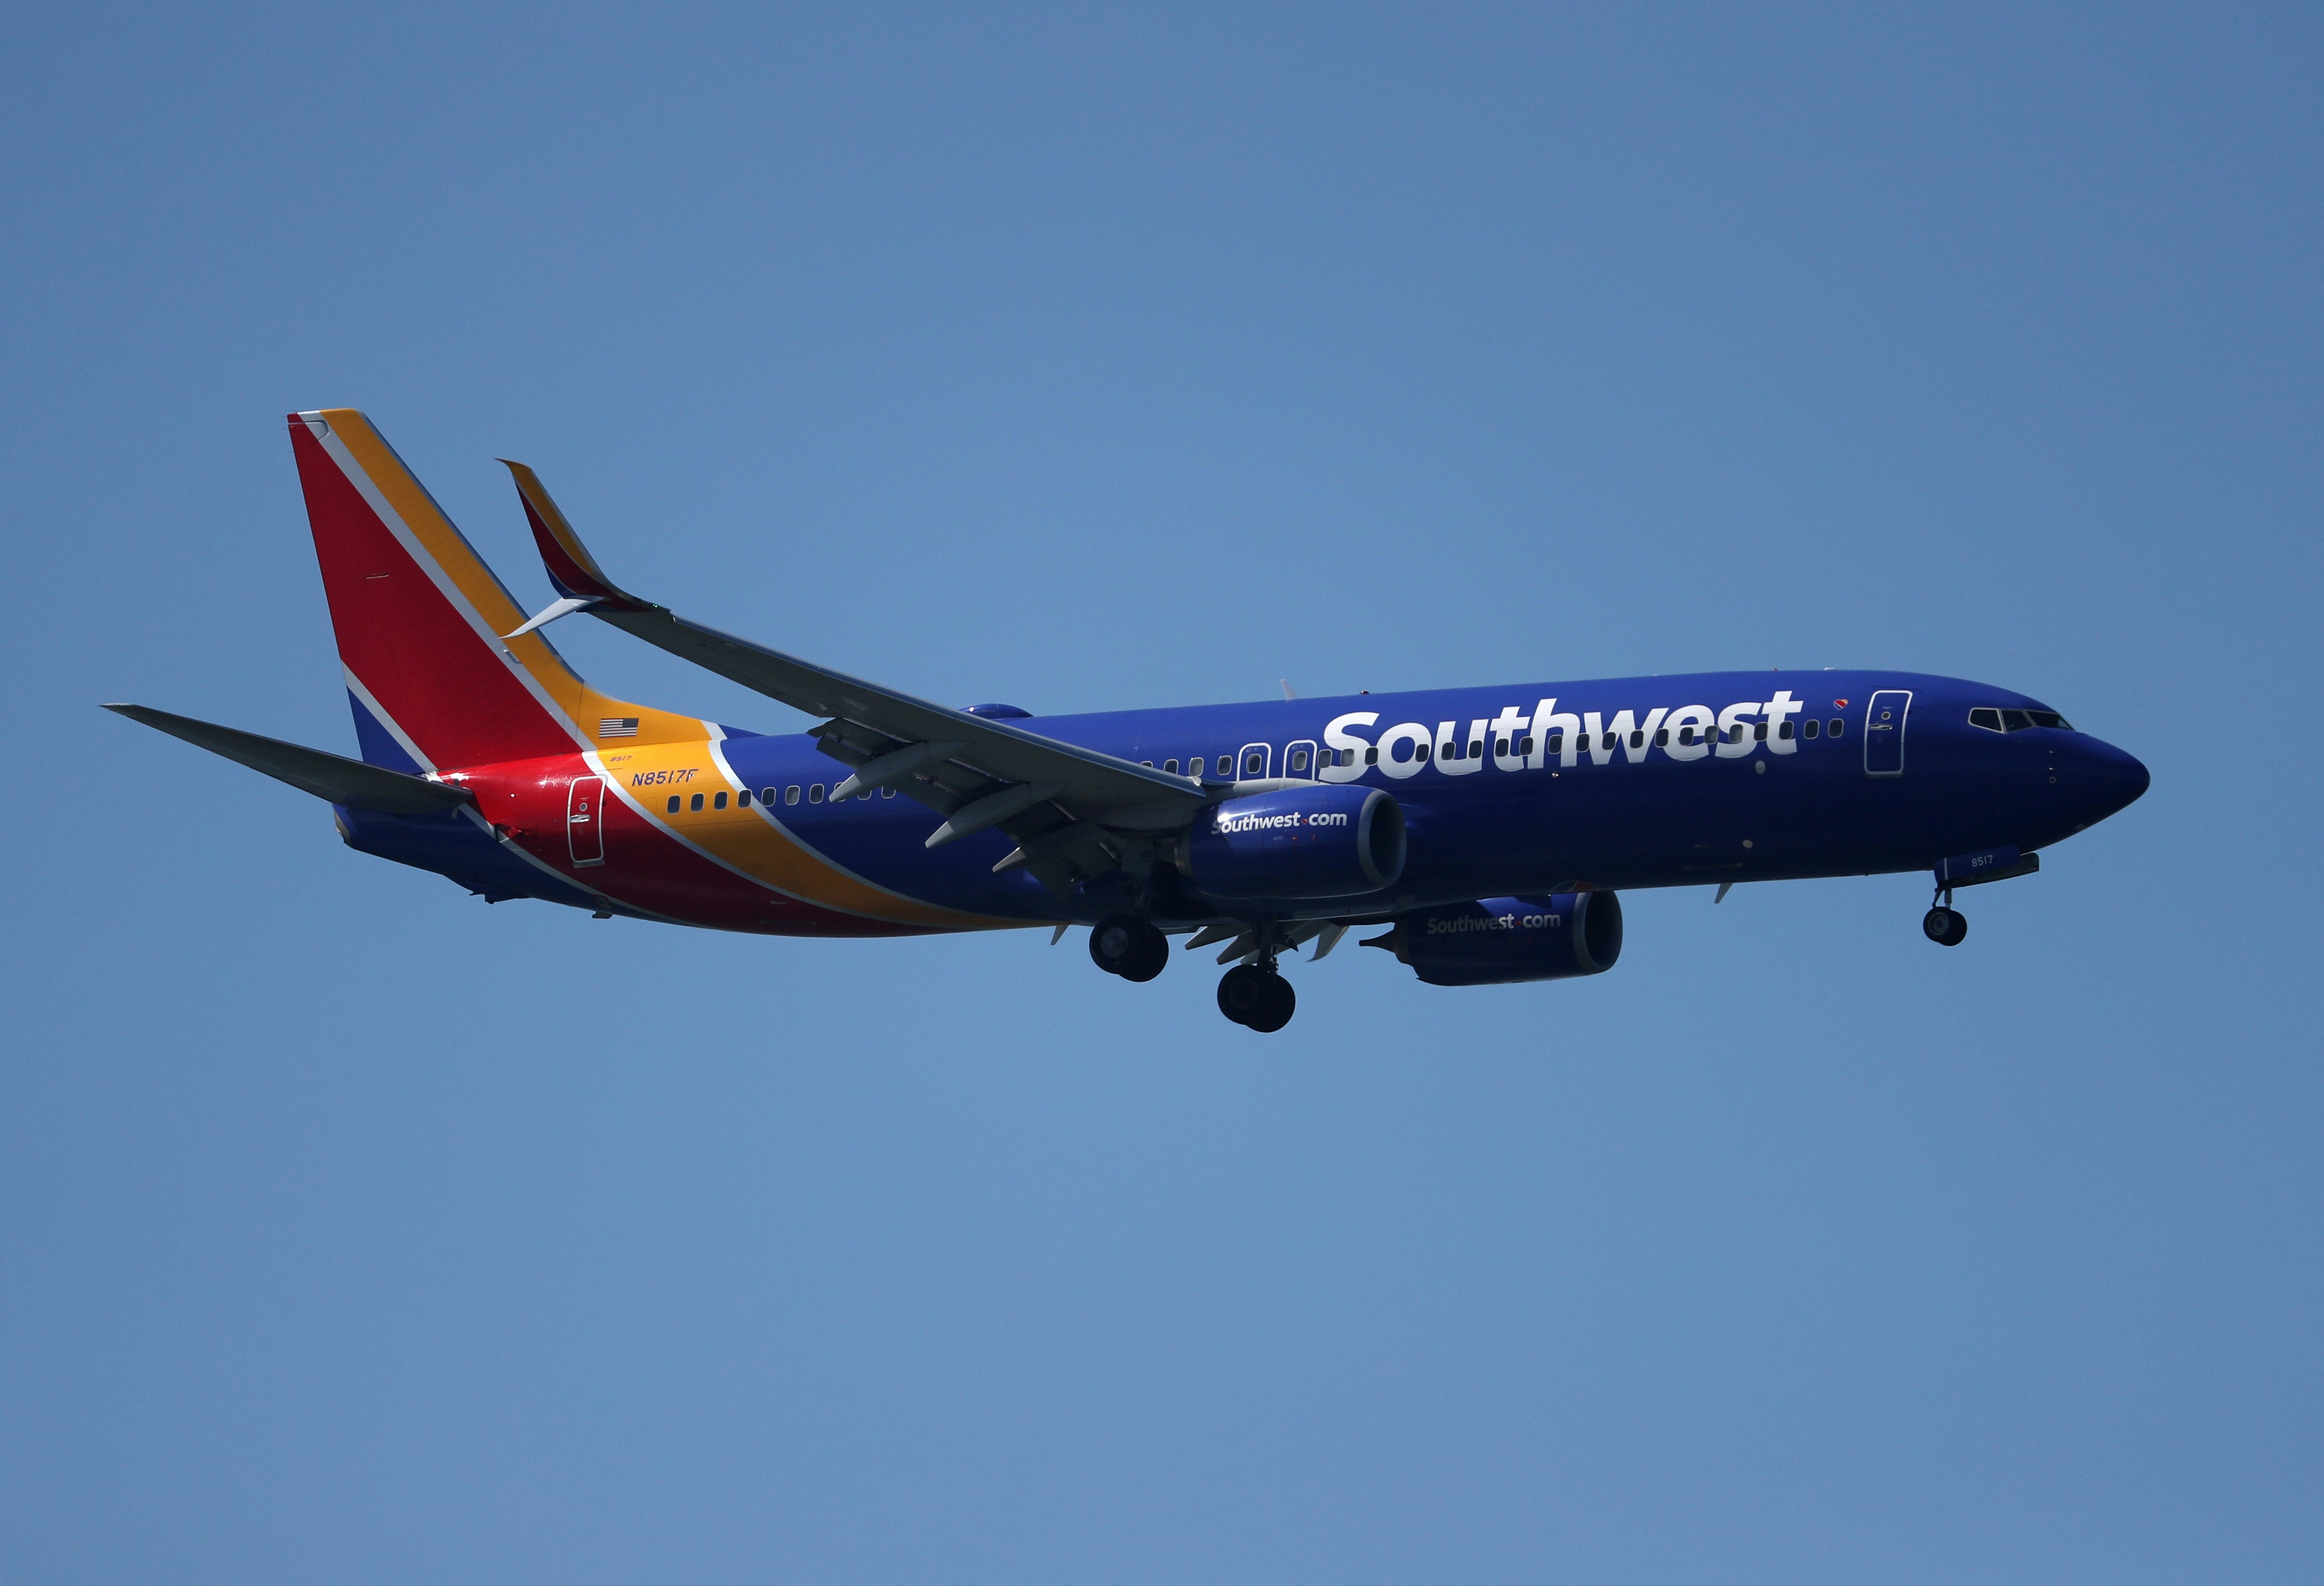 Southwest Airlines' July 2019 Flight 